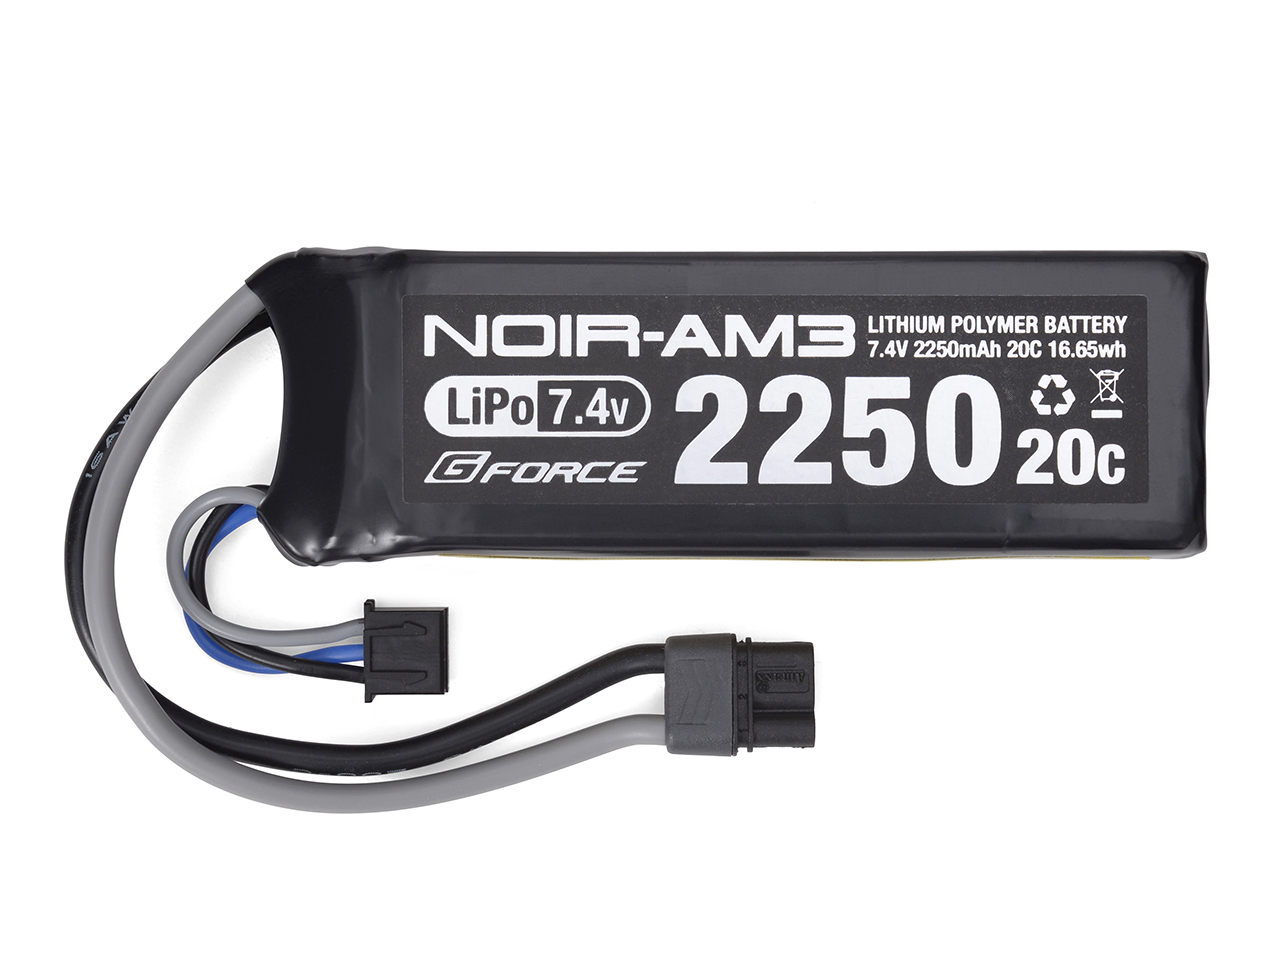 Noir AM3 LiPo 7.4V 2250mAh ミニS互換サイズ 次世代コネクタ仕様 発売